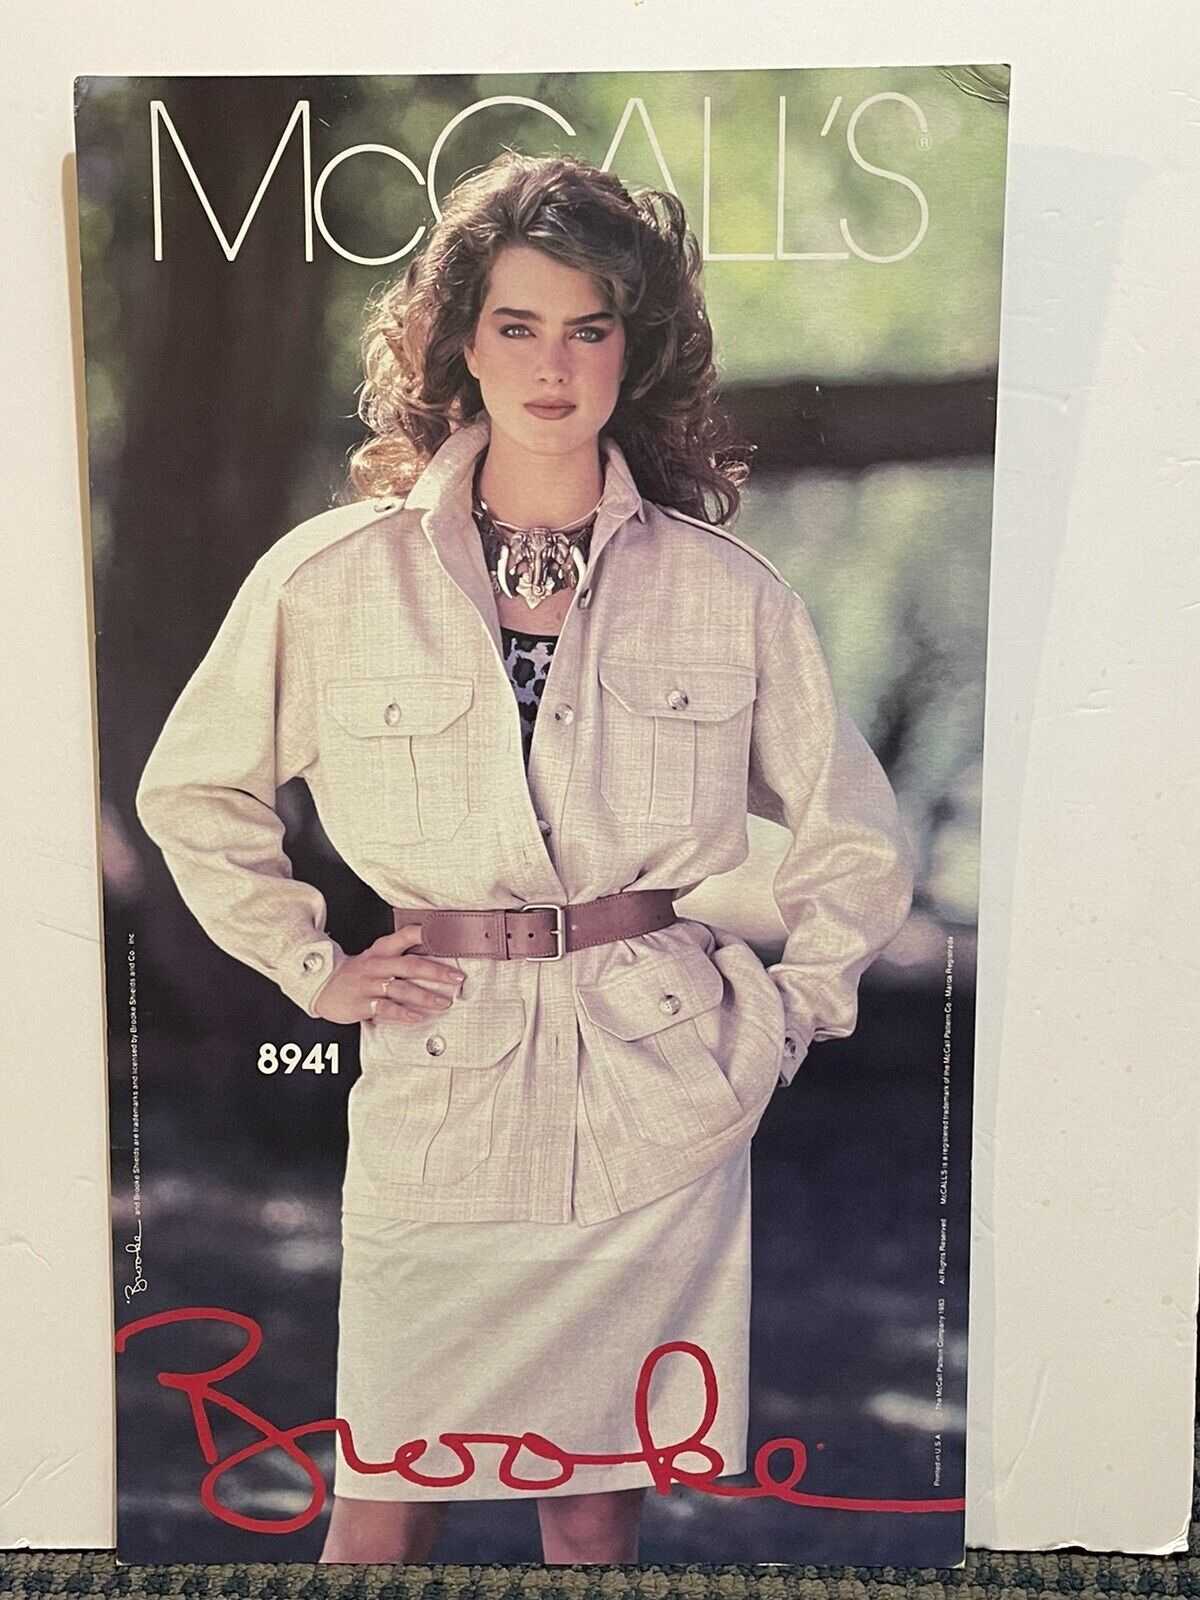 1983 Brooke Shields “McCalls” Countertop Promo Card, 22” x 13”